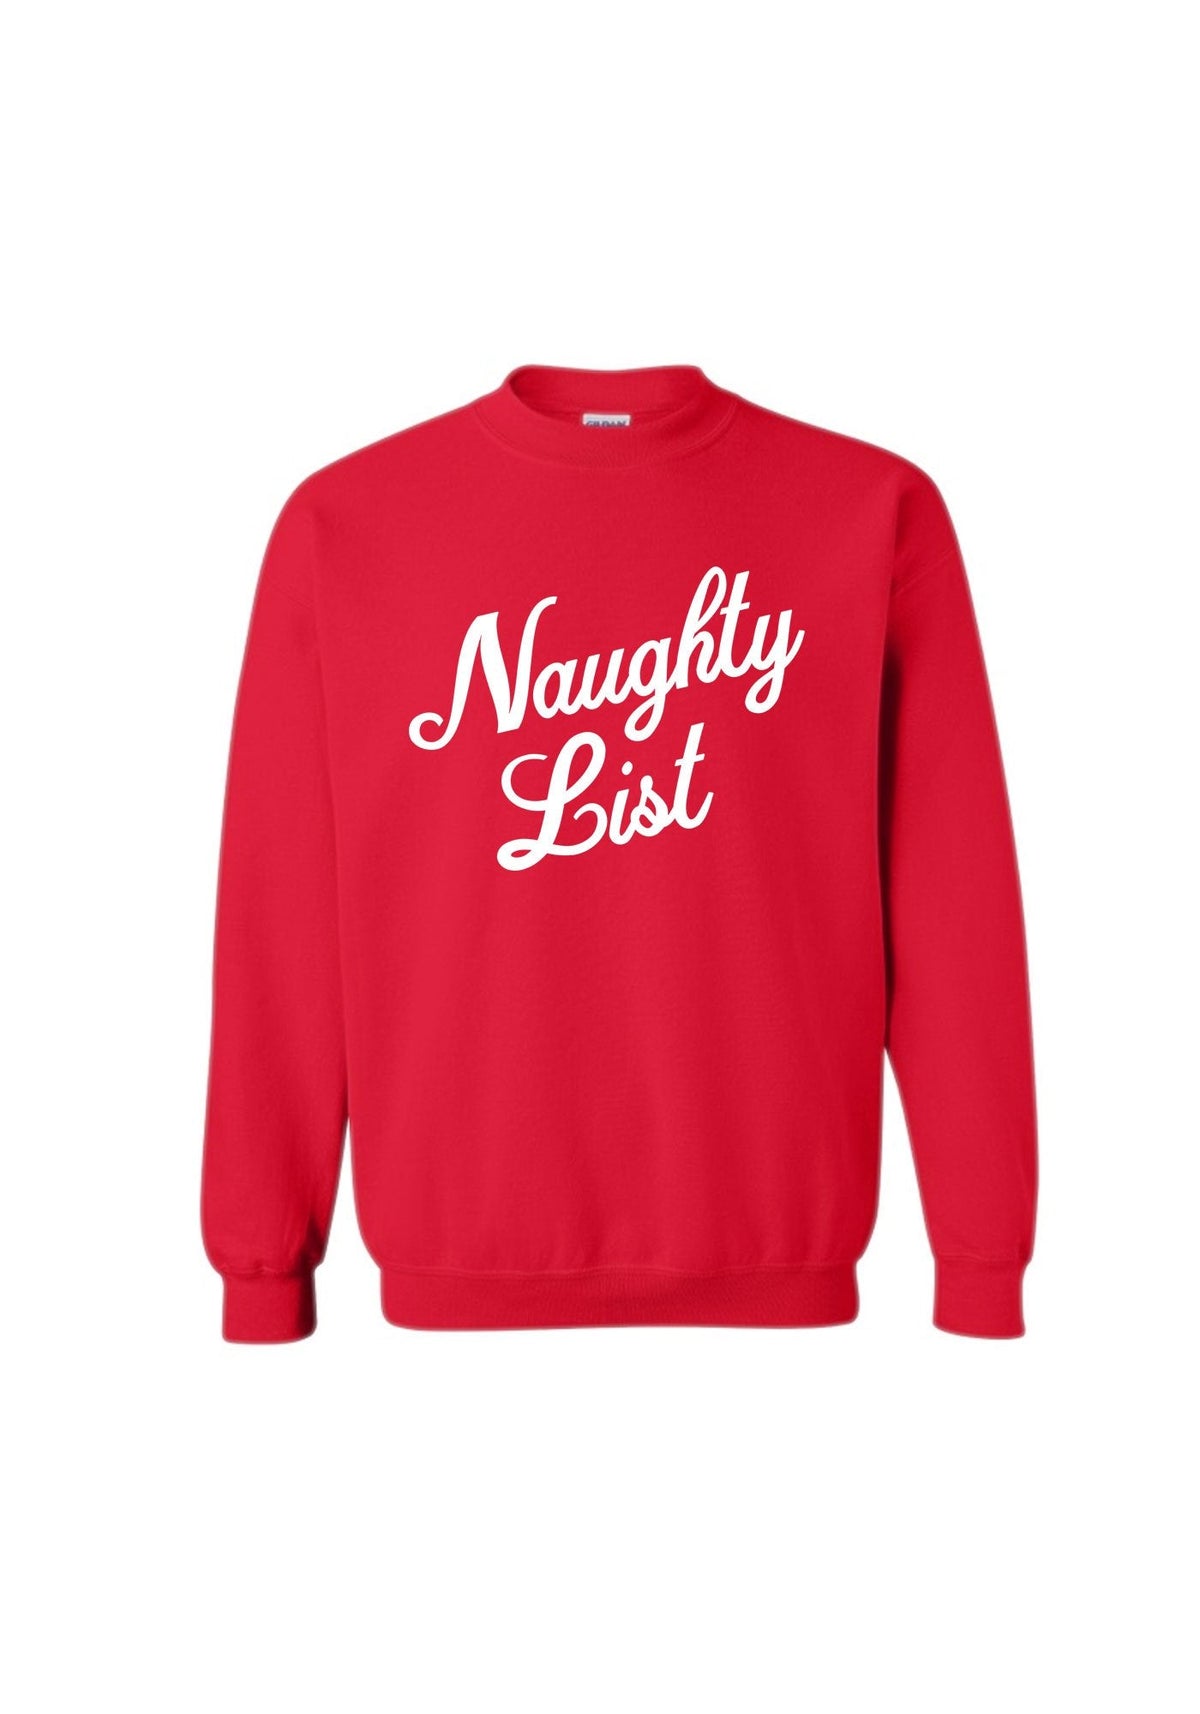 Naughty List Sweatshirt by kaeraz christmas christmas sweater happy holidays